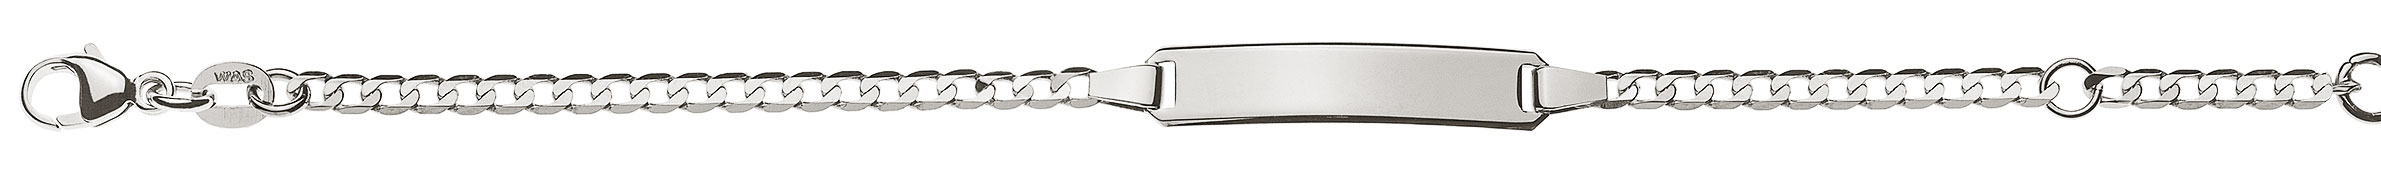 AURONOS Prestige ID-Bracelet en or blanc 18k Chaîne blindée diamantée 14cm